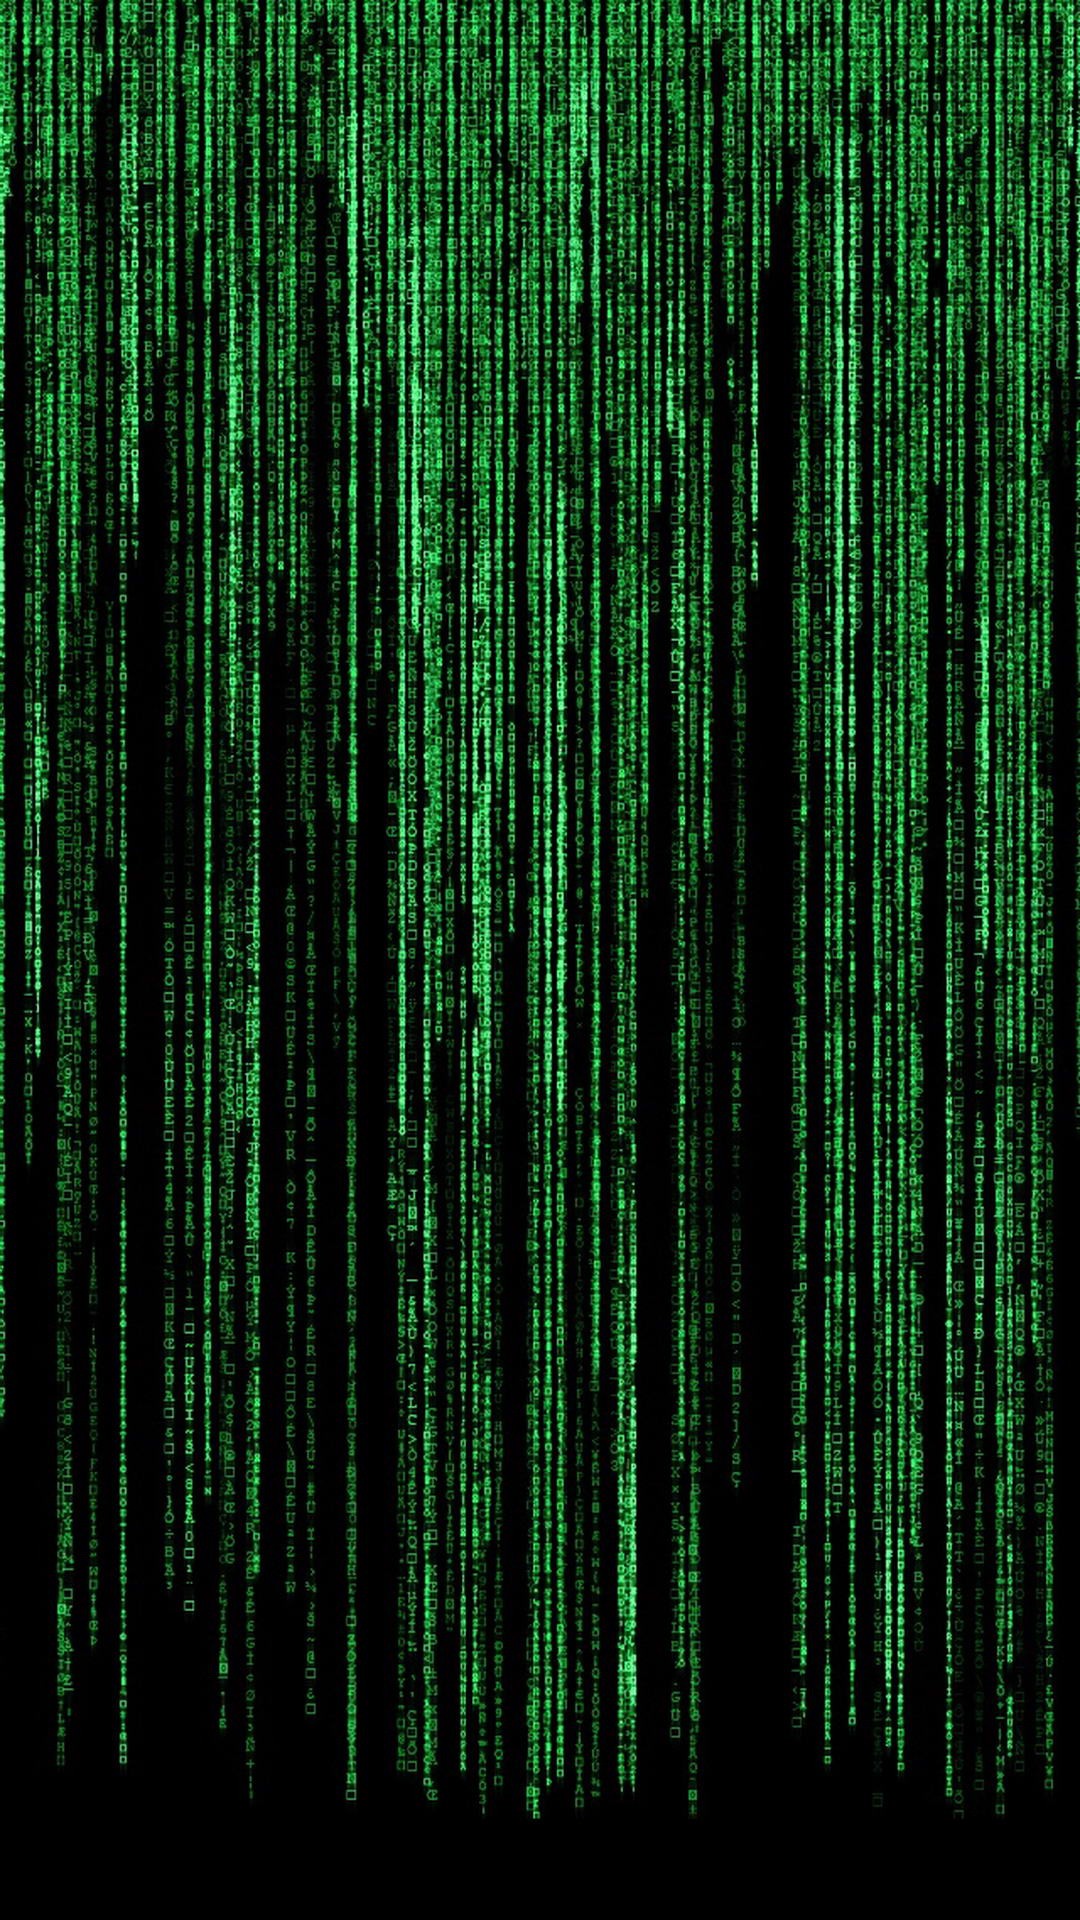 General 1080x1920 The Matrix movies code 1999 (Year) green portrait display